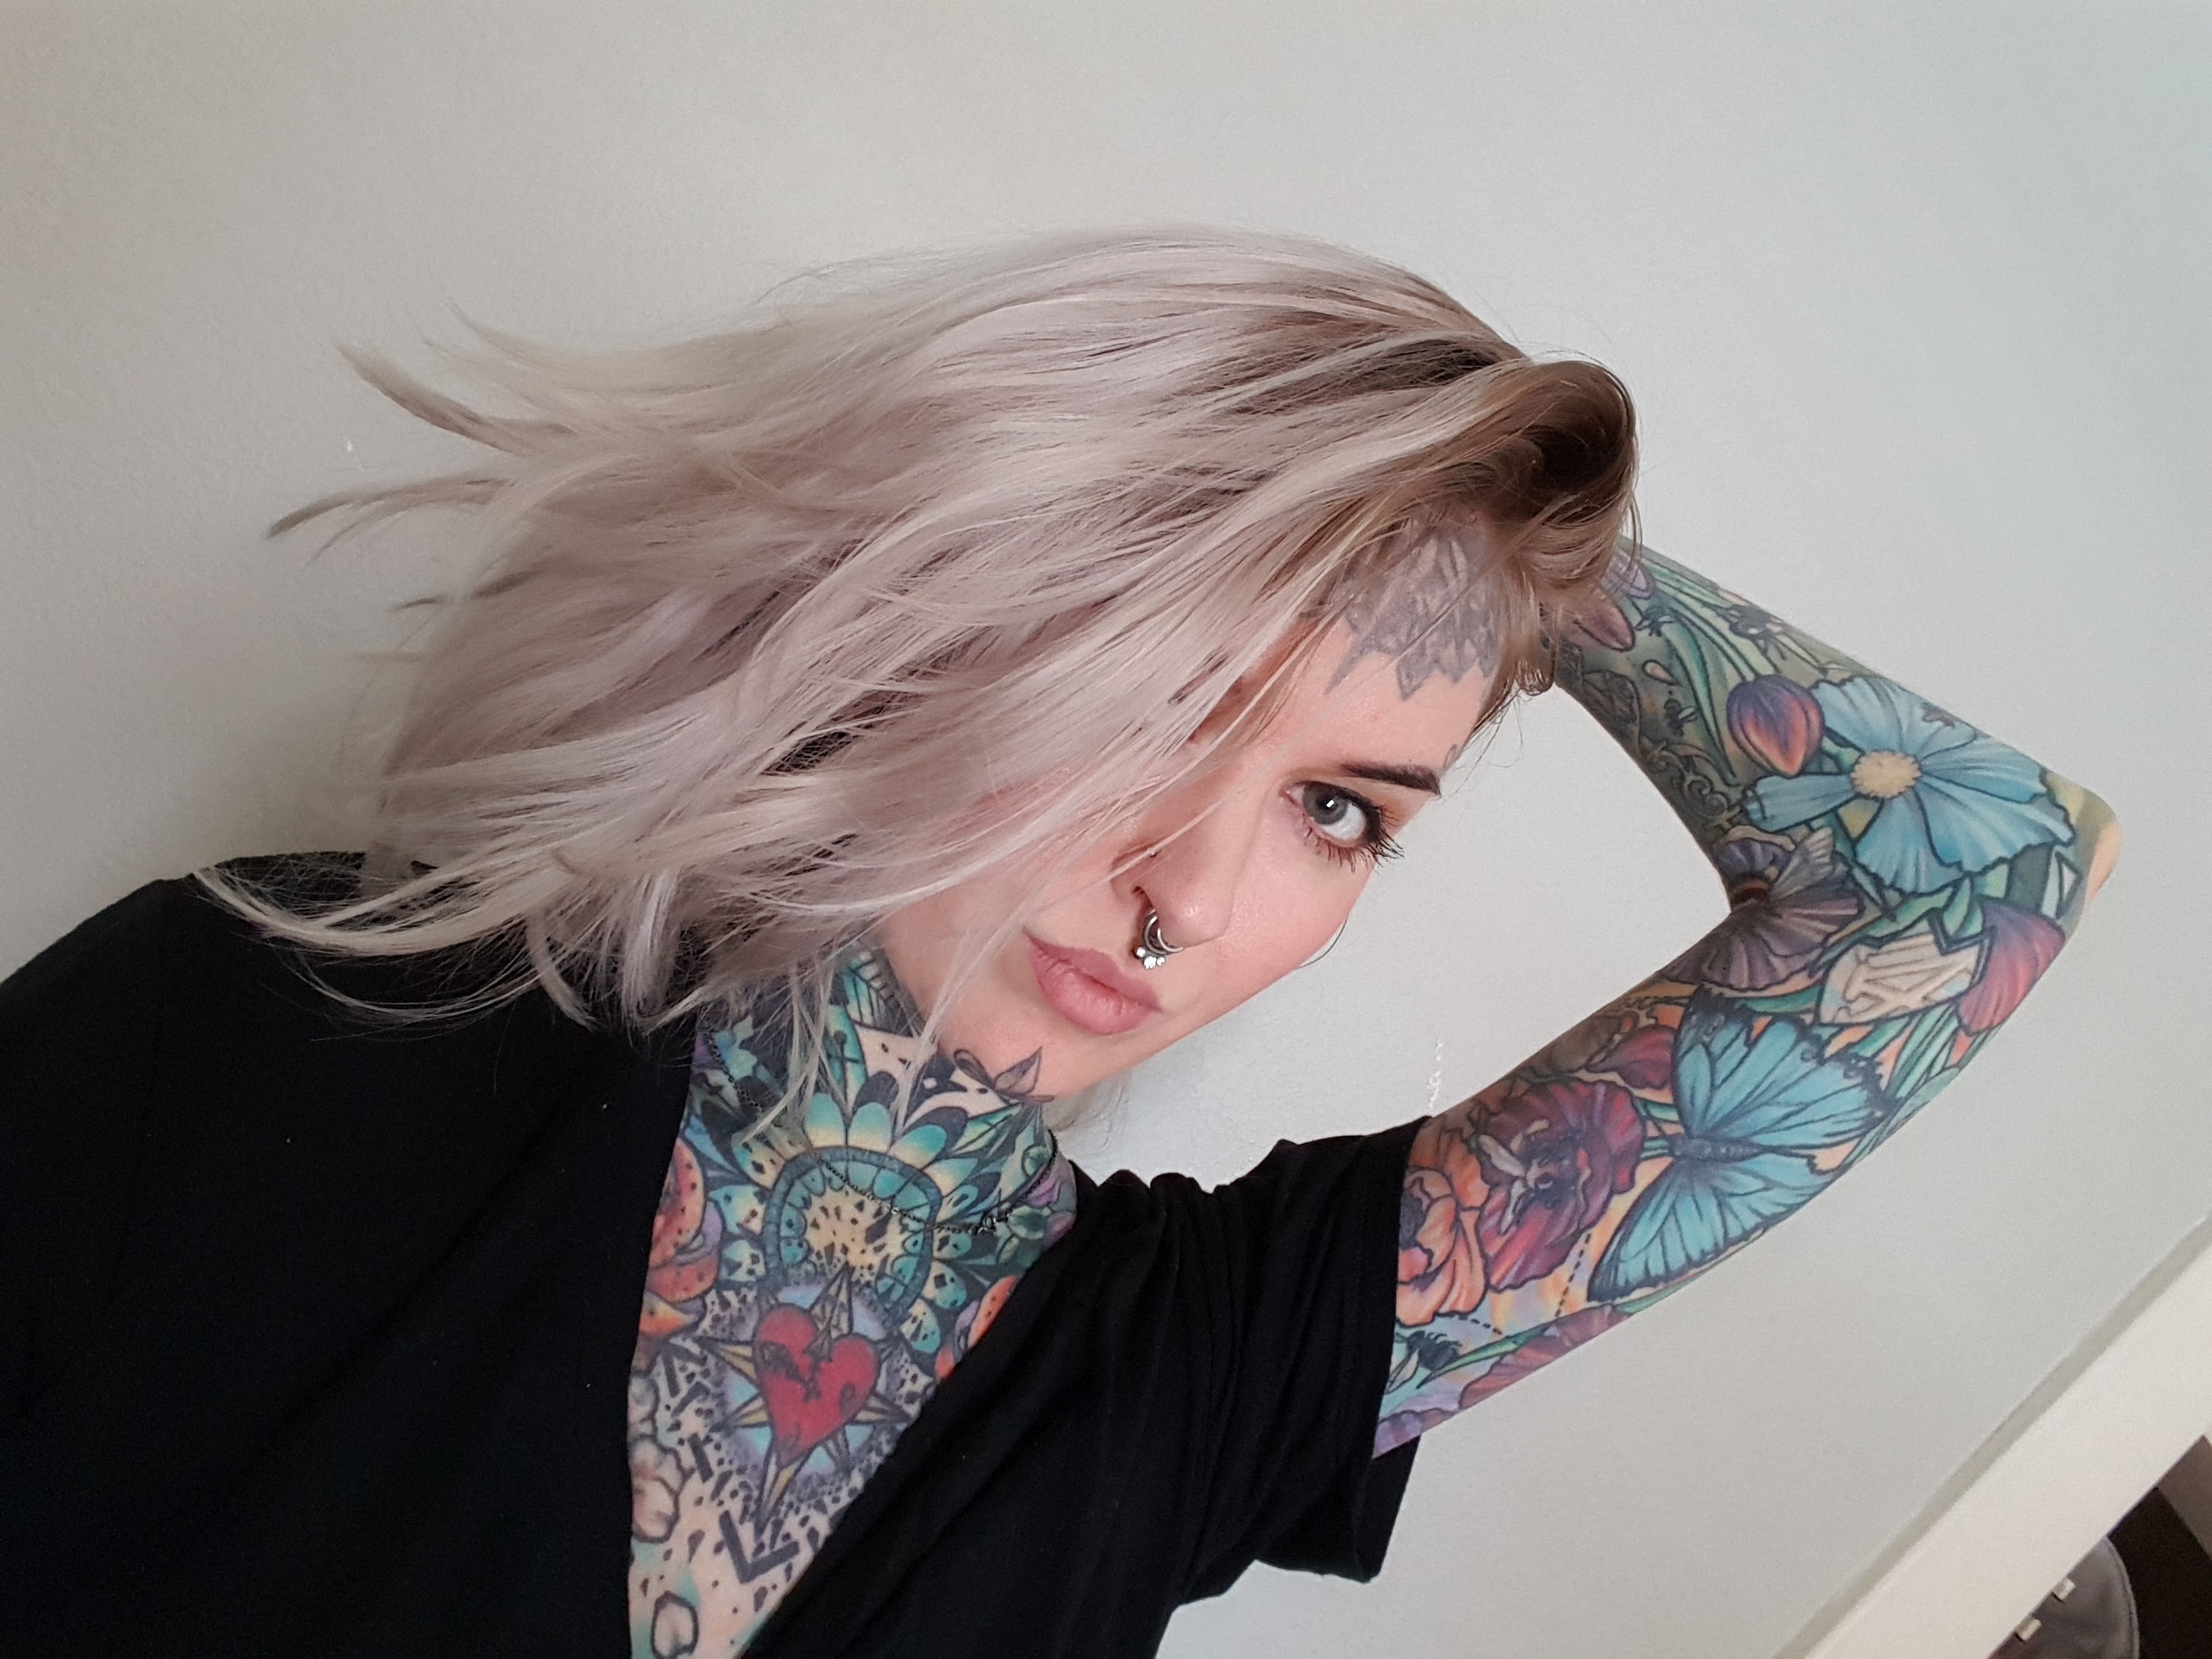 schwarzkopf blonde hair dye review